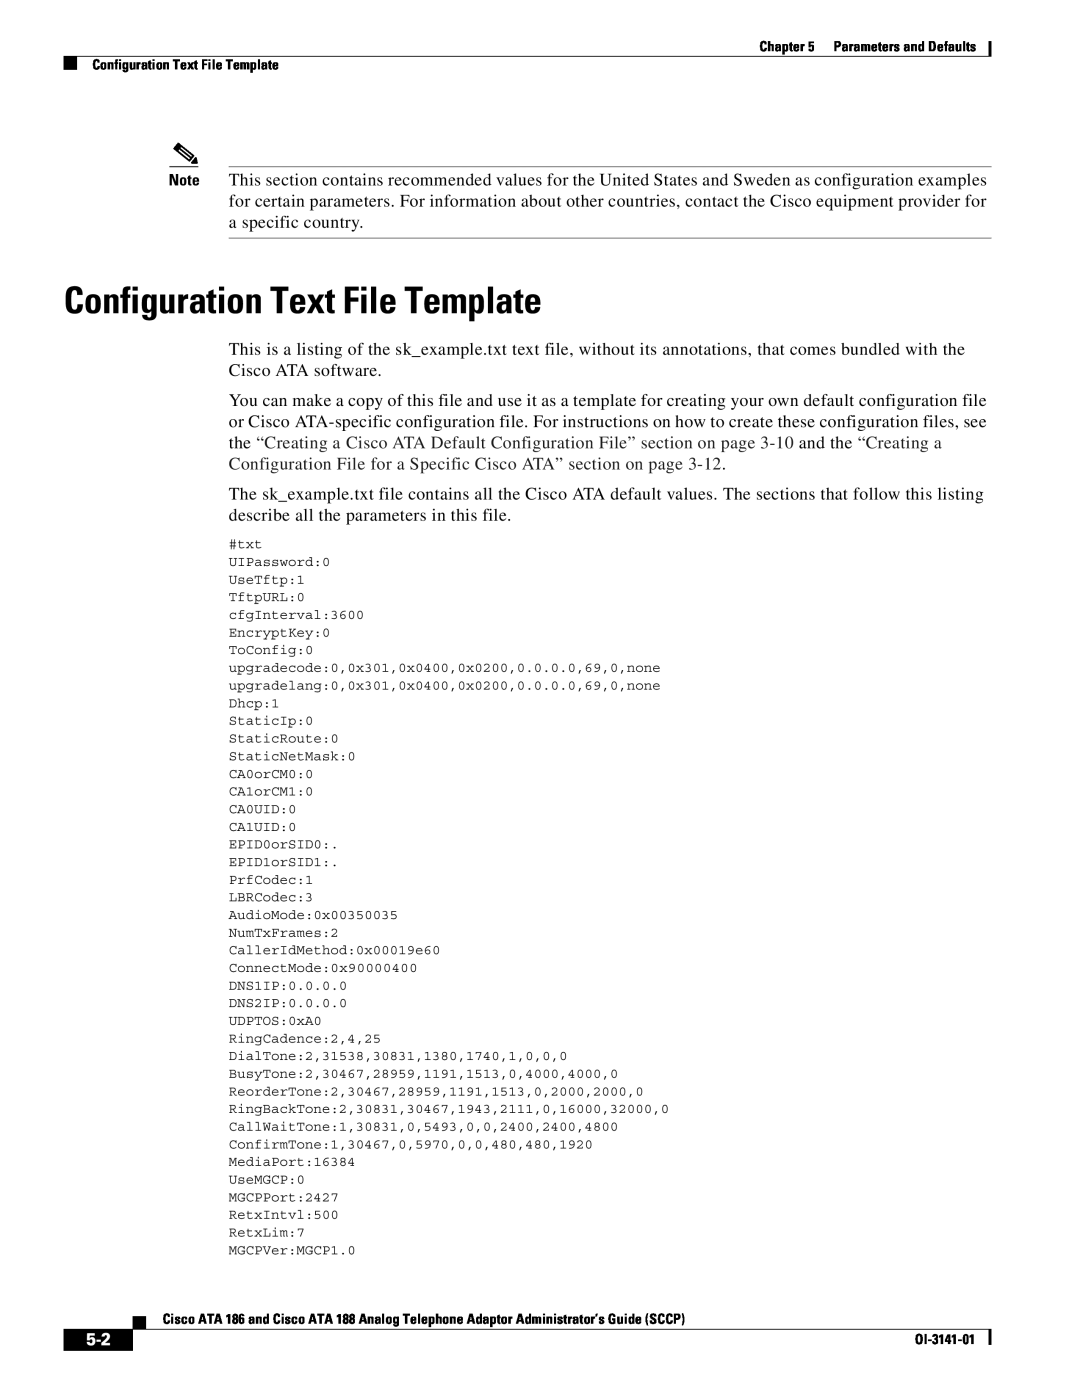 Cisco Systems ATA 186, ATA 188 manual Configuration Text File Template 